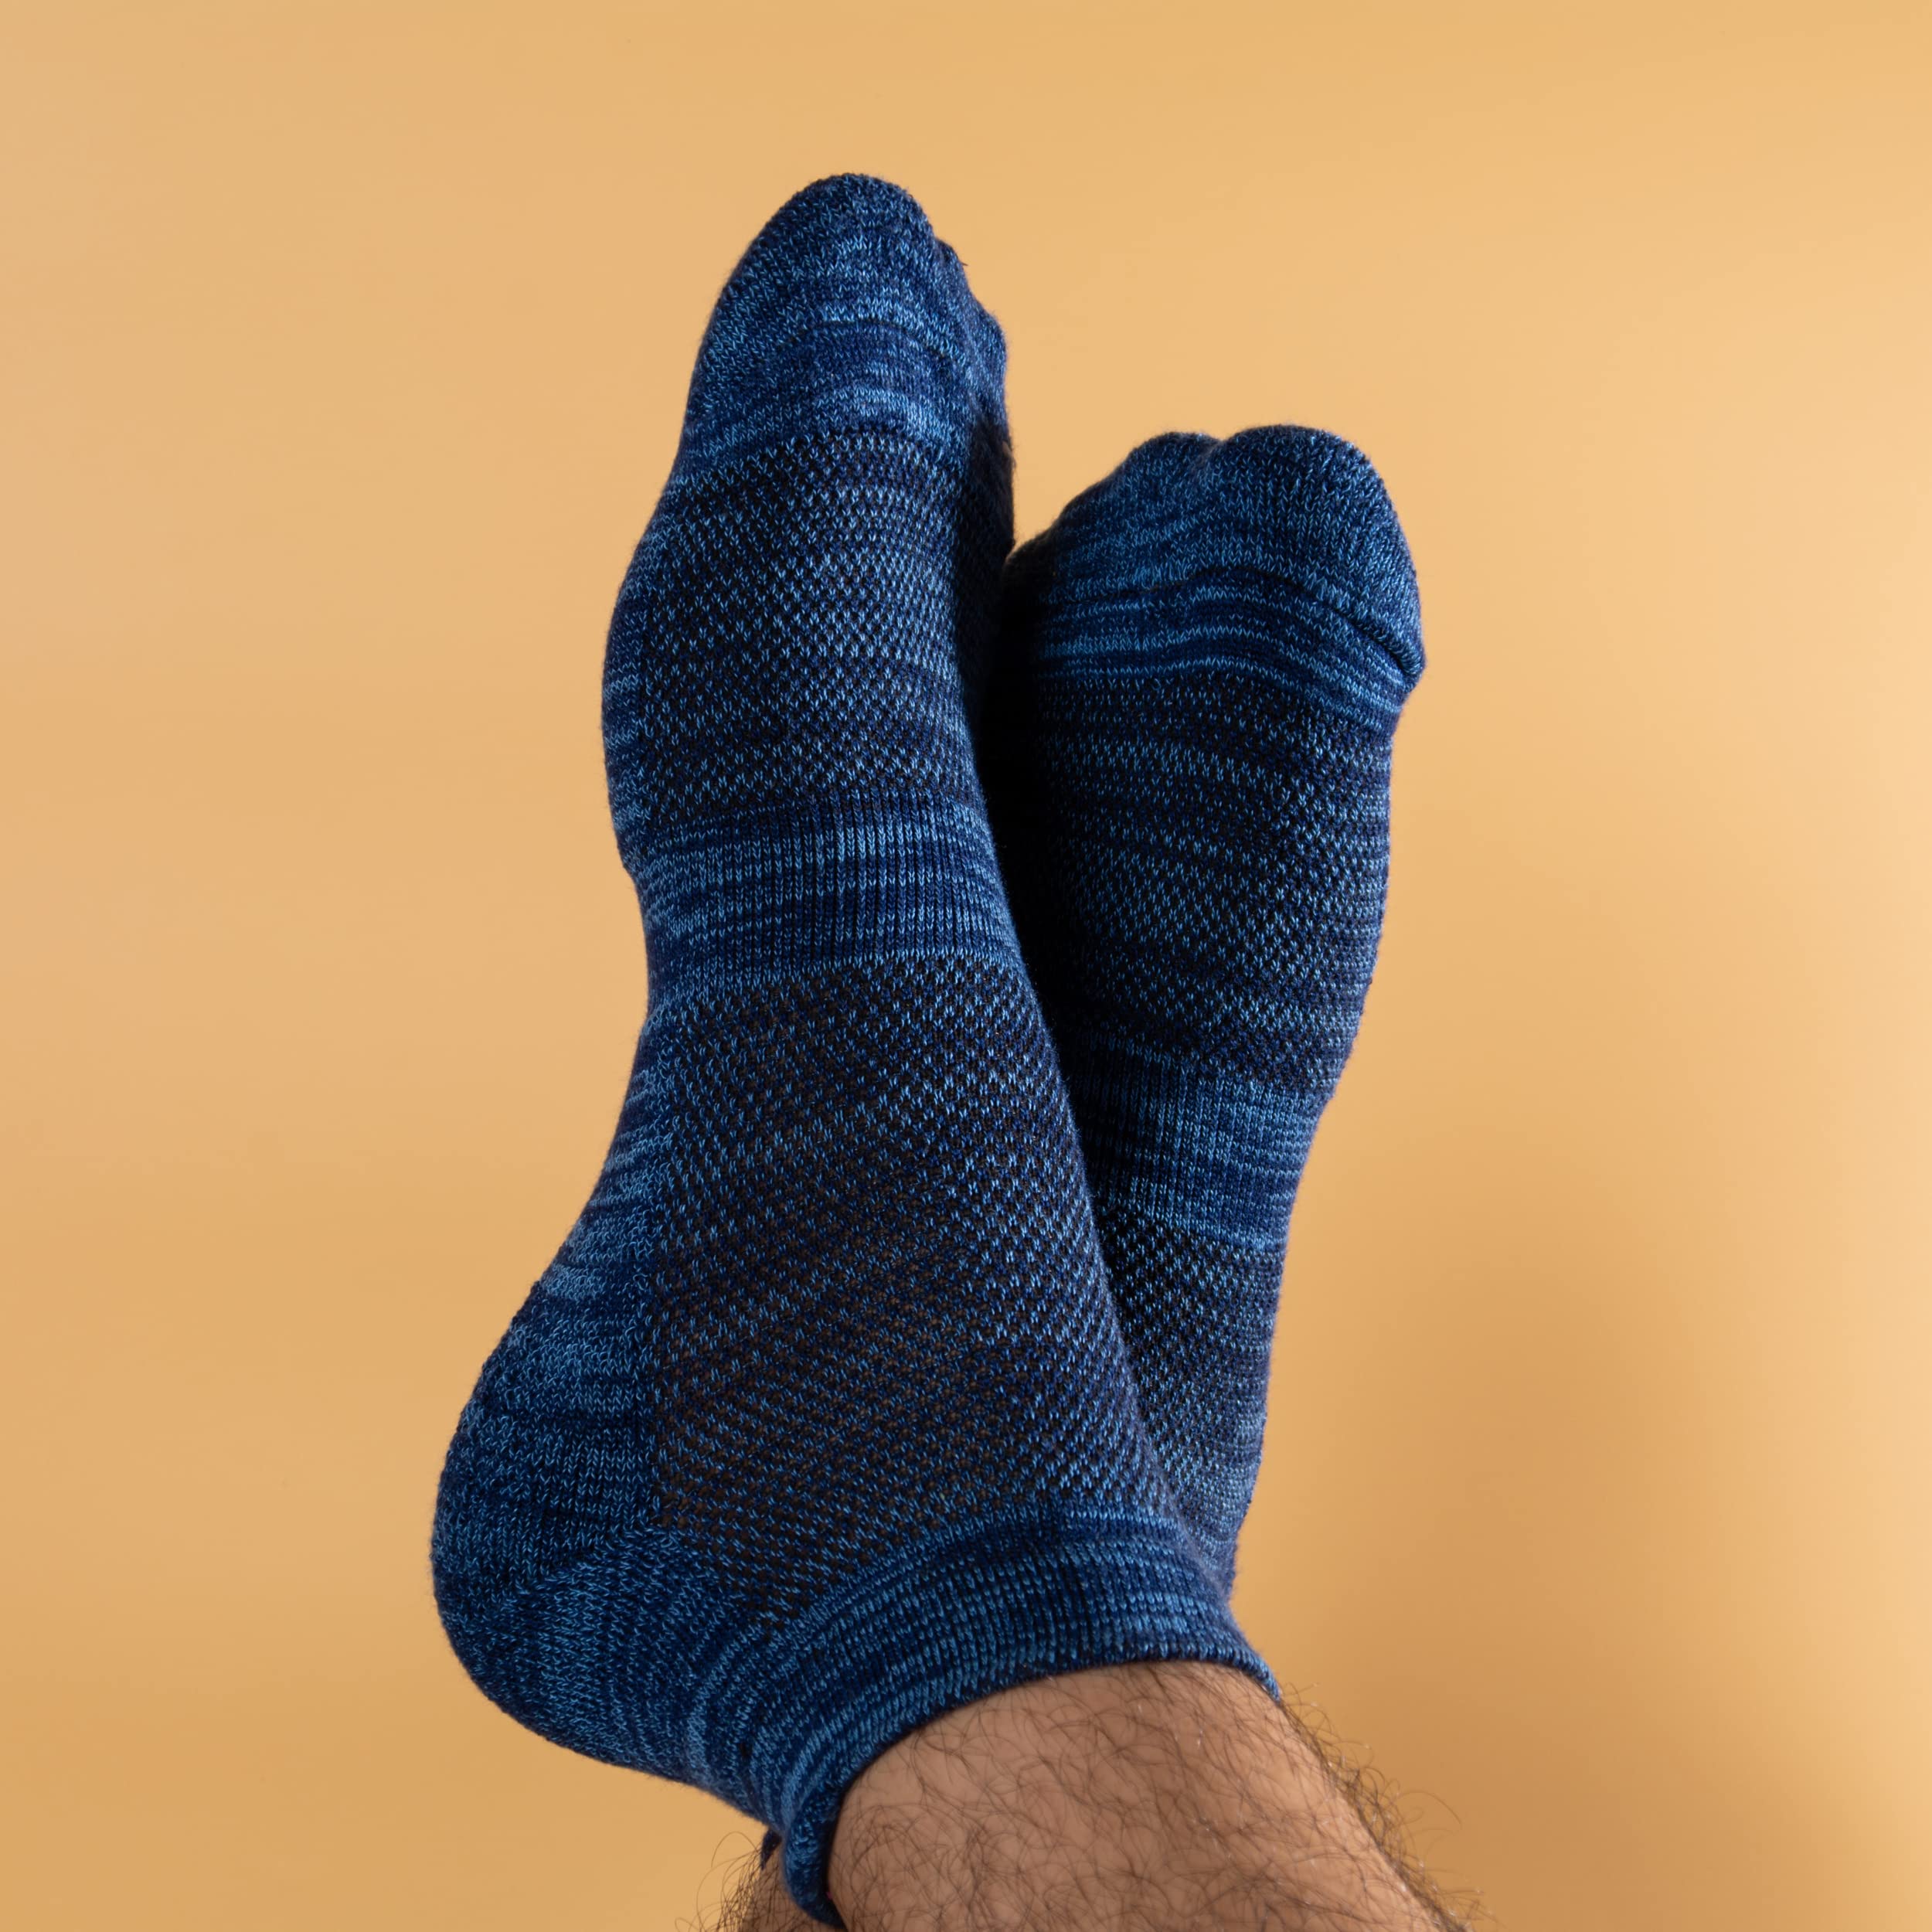 Mush Bamboo Ultra Soft, Anti Odor, Breathable Anti Blister Ankle Socks for Men & Women for Casual & Sports Wear (Pack of 3, Melange Assorted )